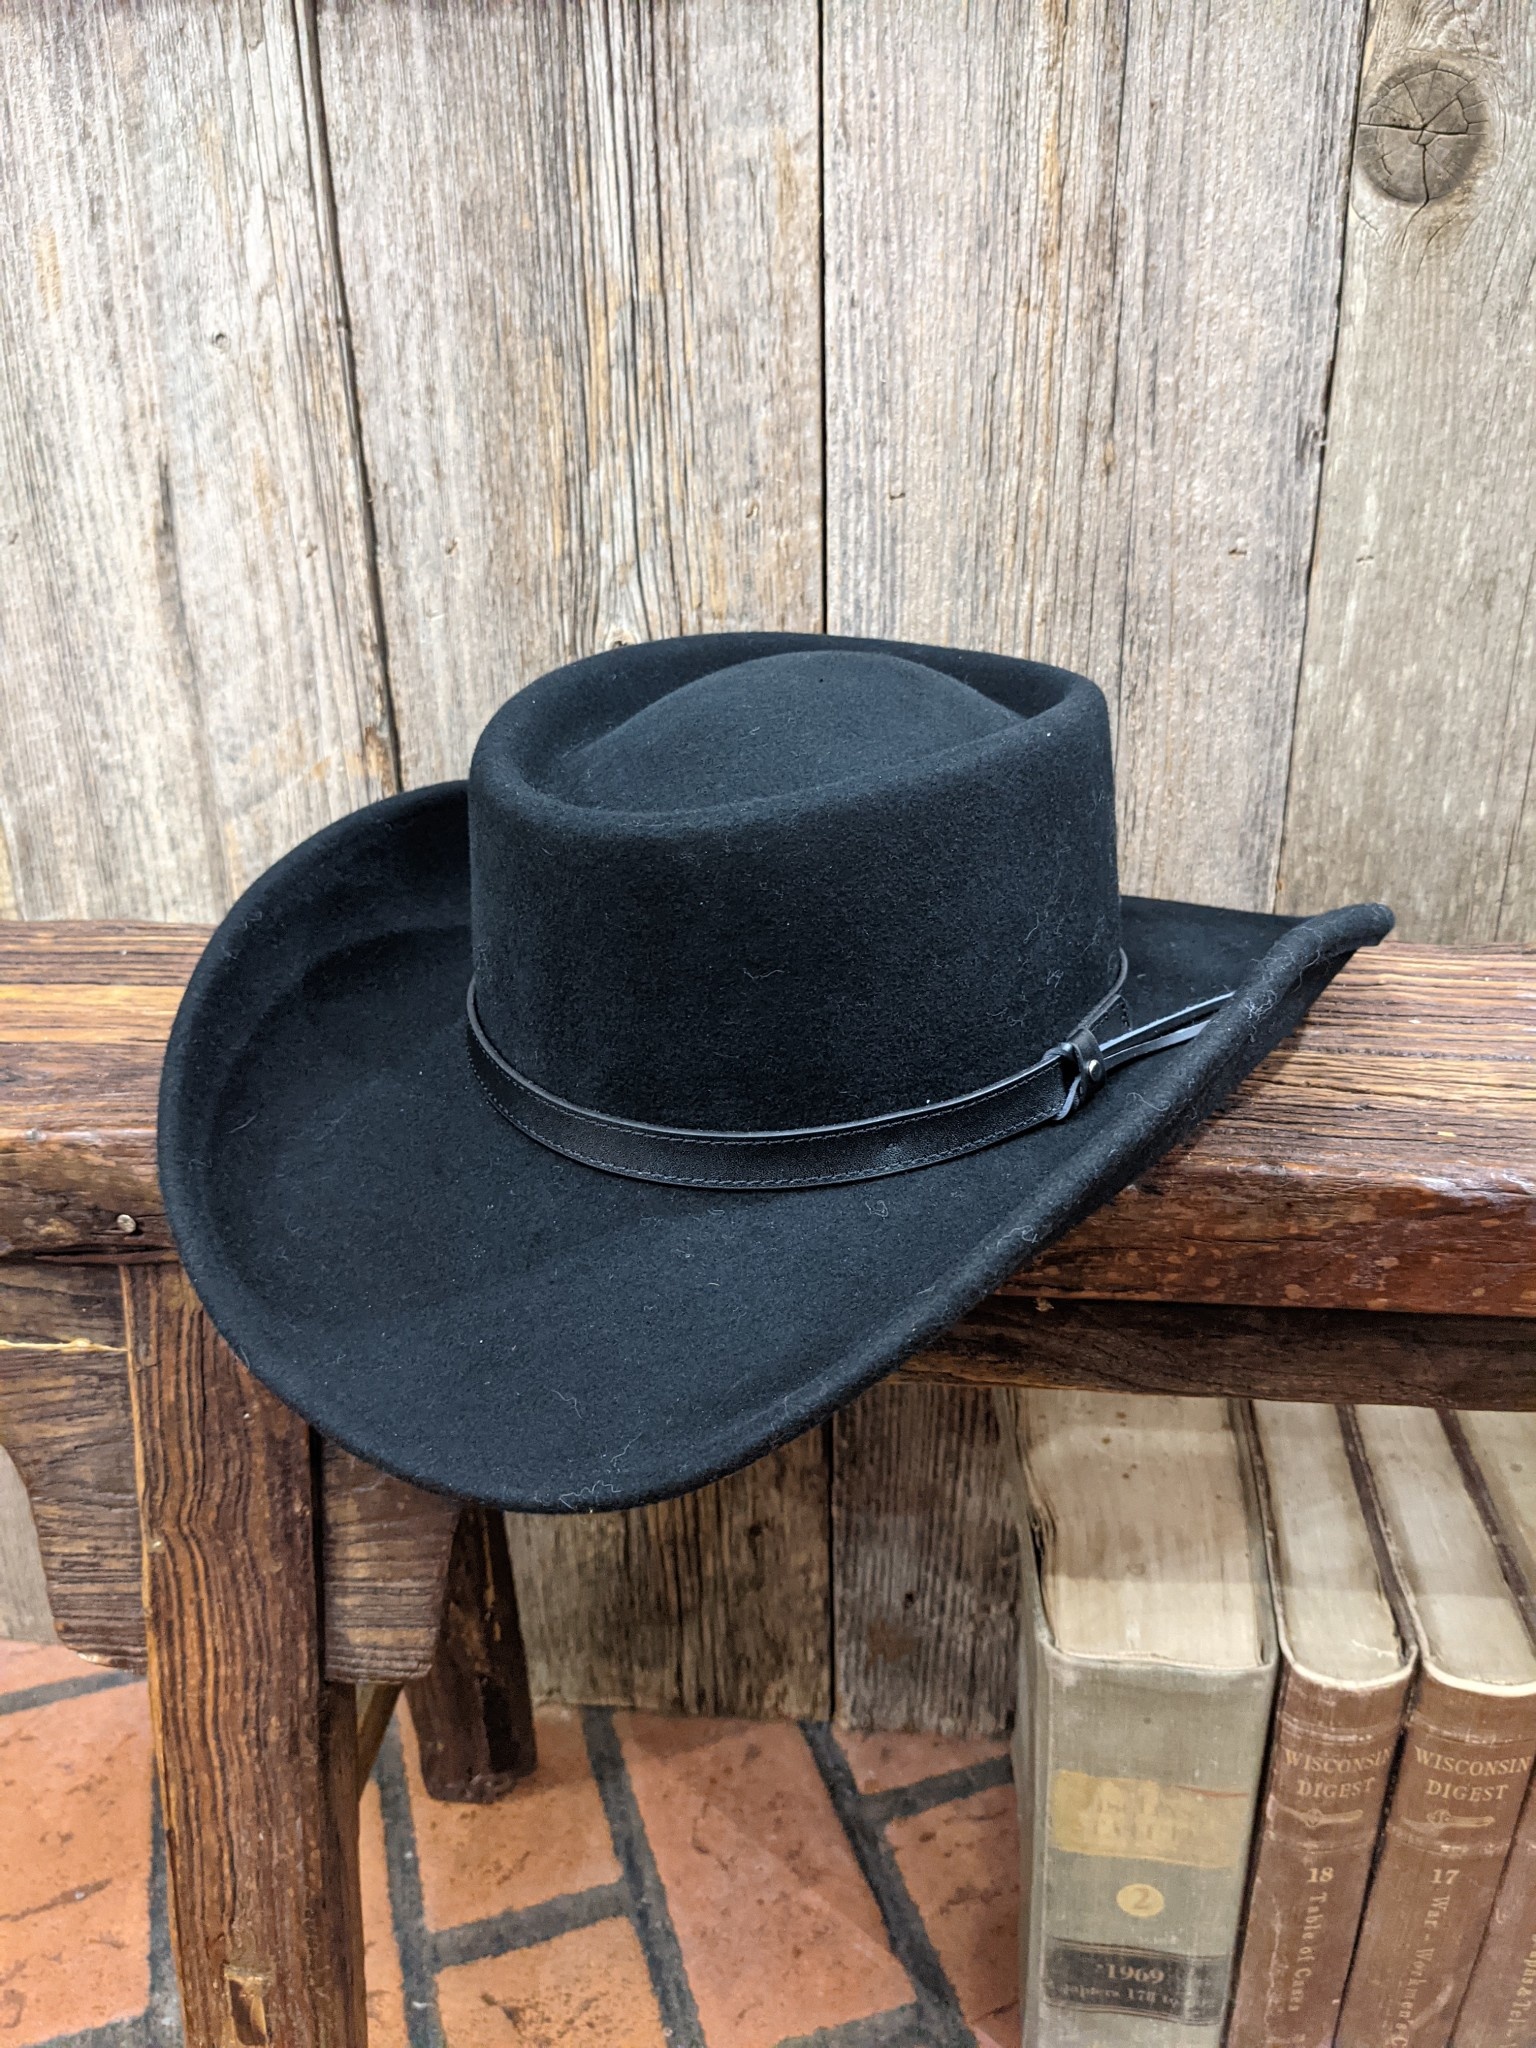 Twister Gambler Crushable Hat Medium Black